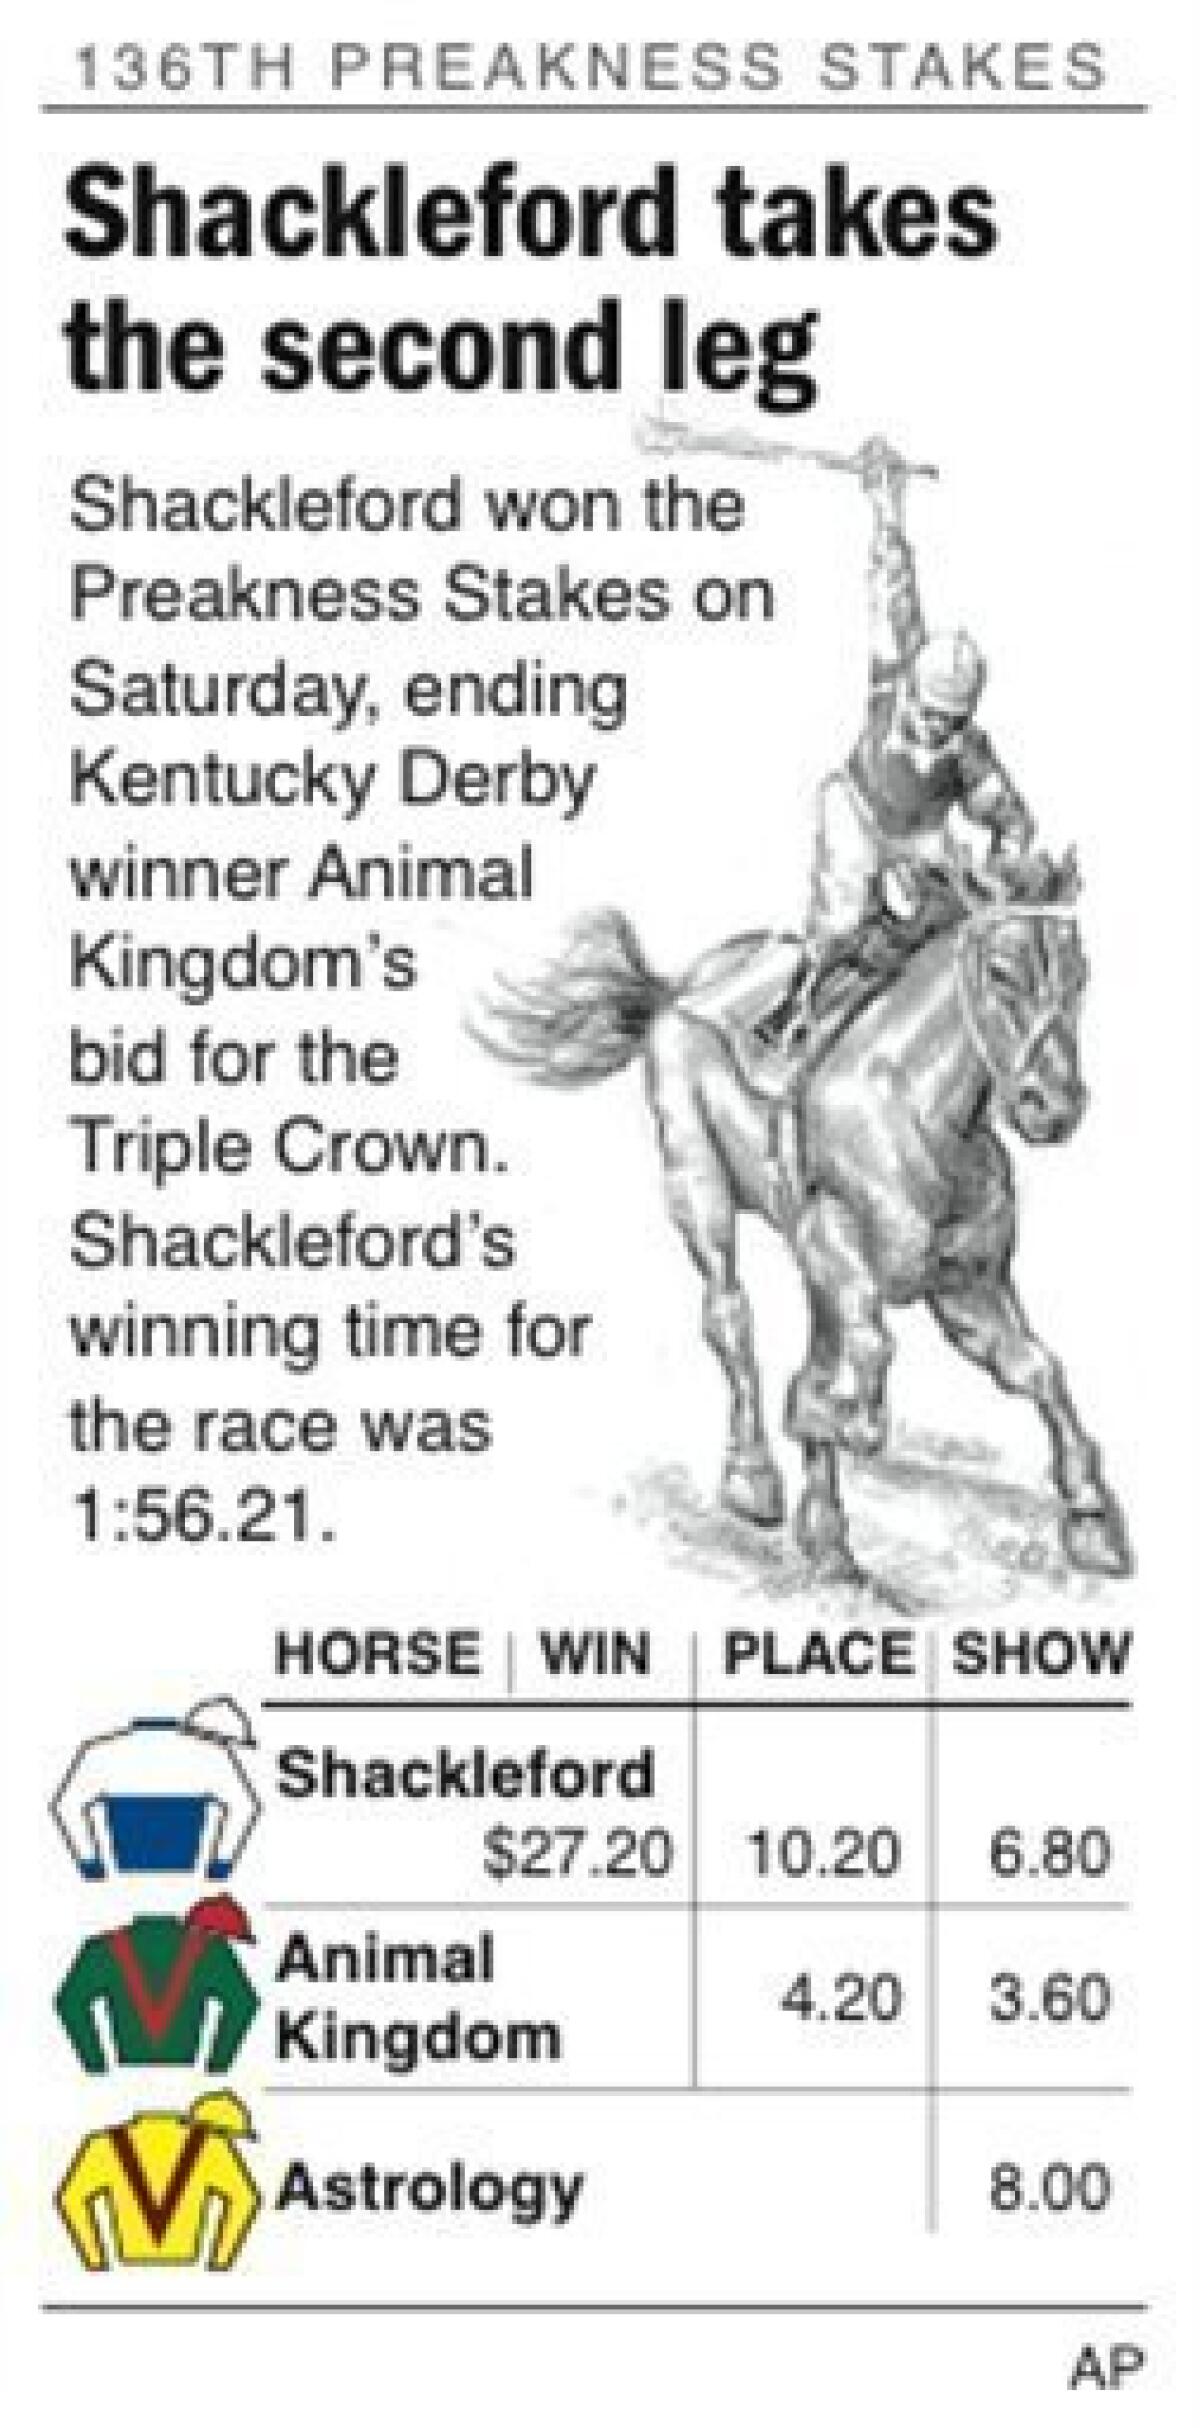 Preakness Stakes winner Shackleford ends Animal Kingdom's bid for